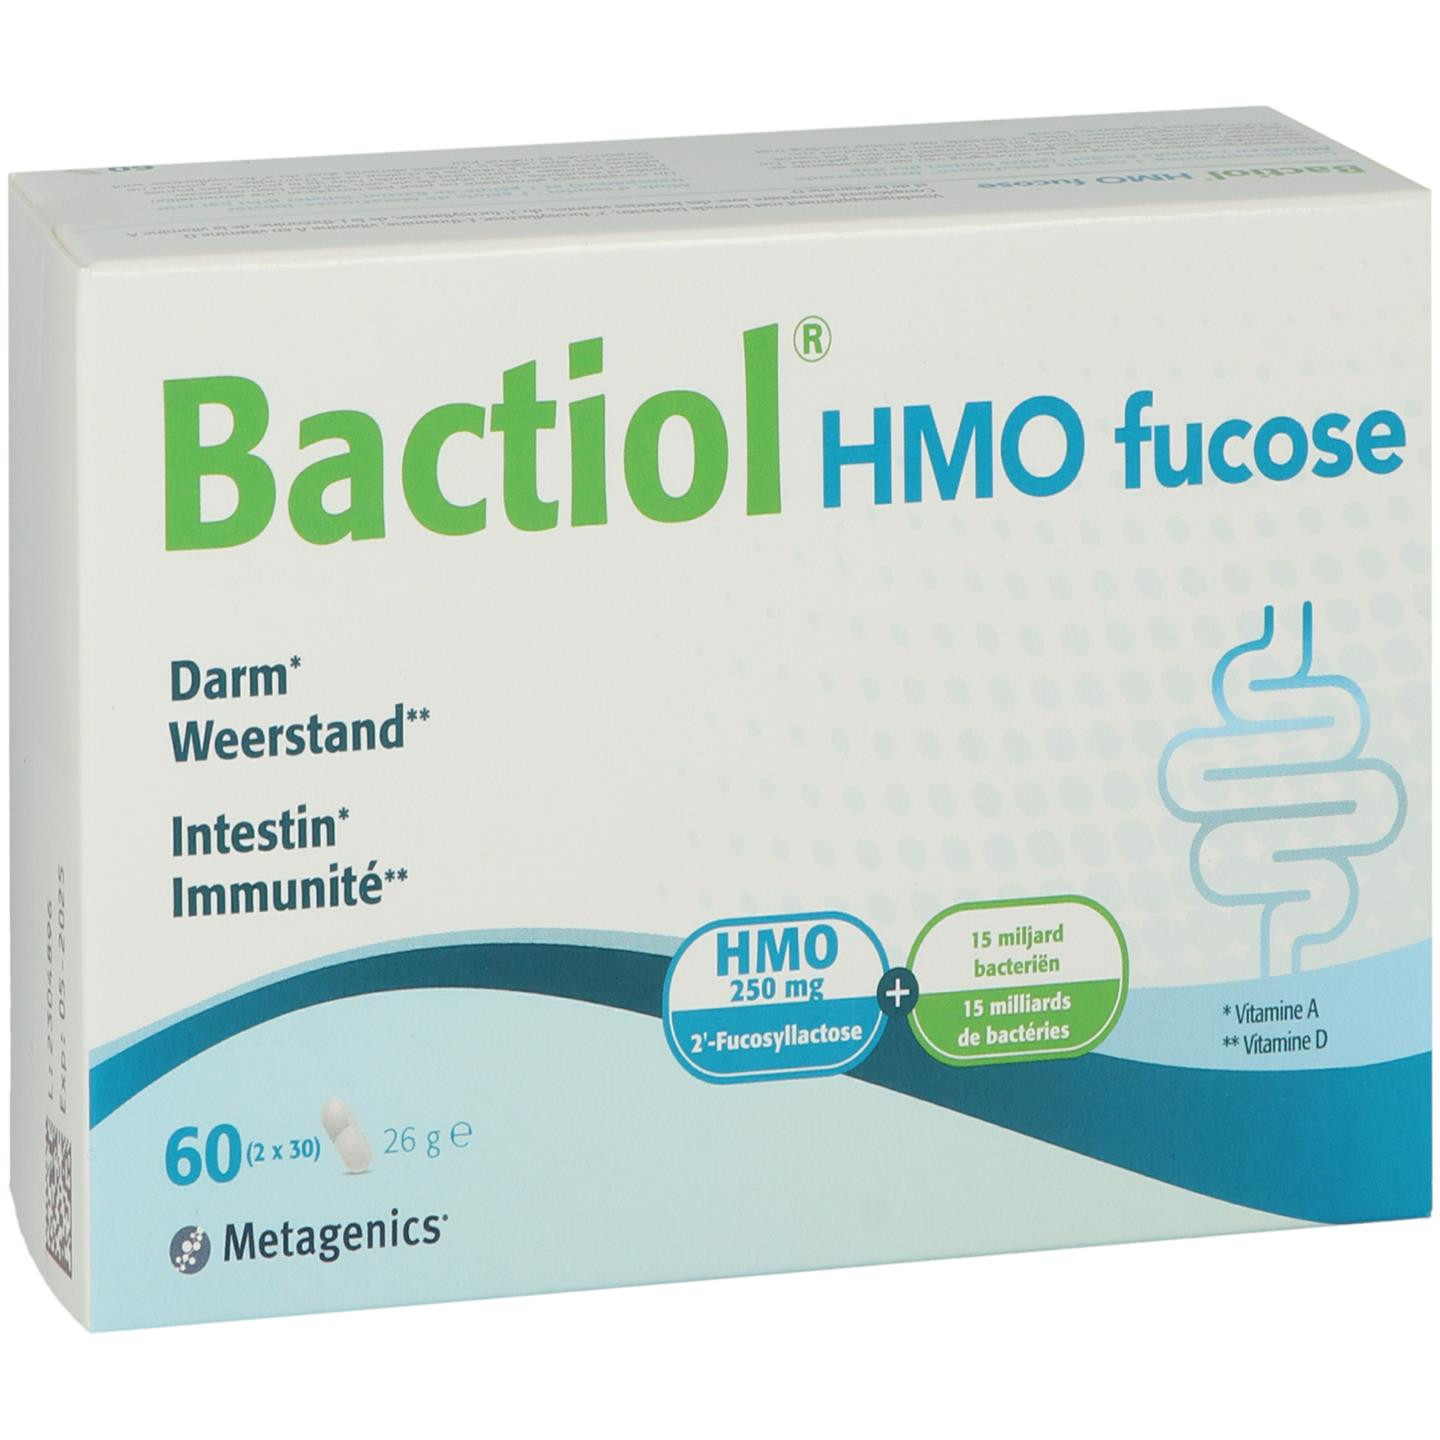 Bactiol HMO fucose